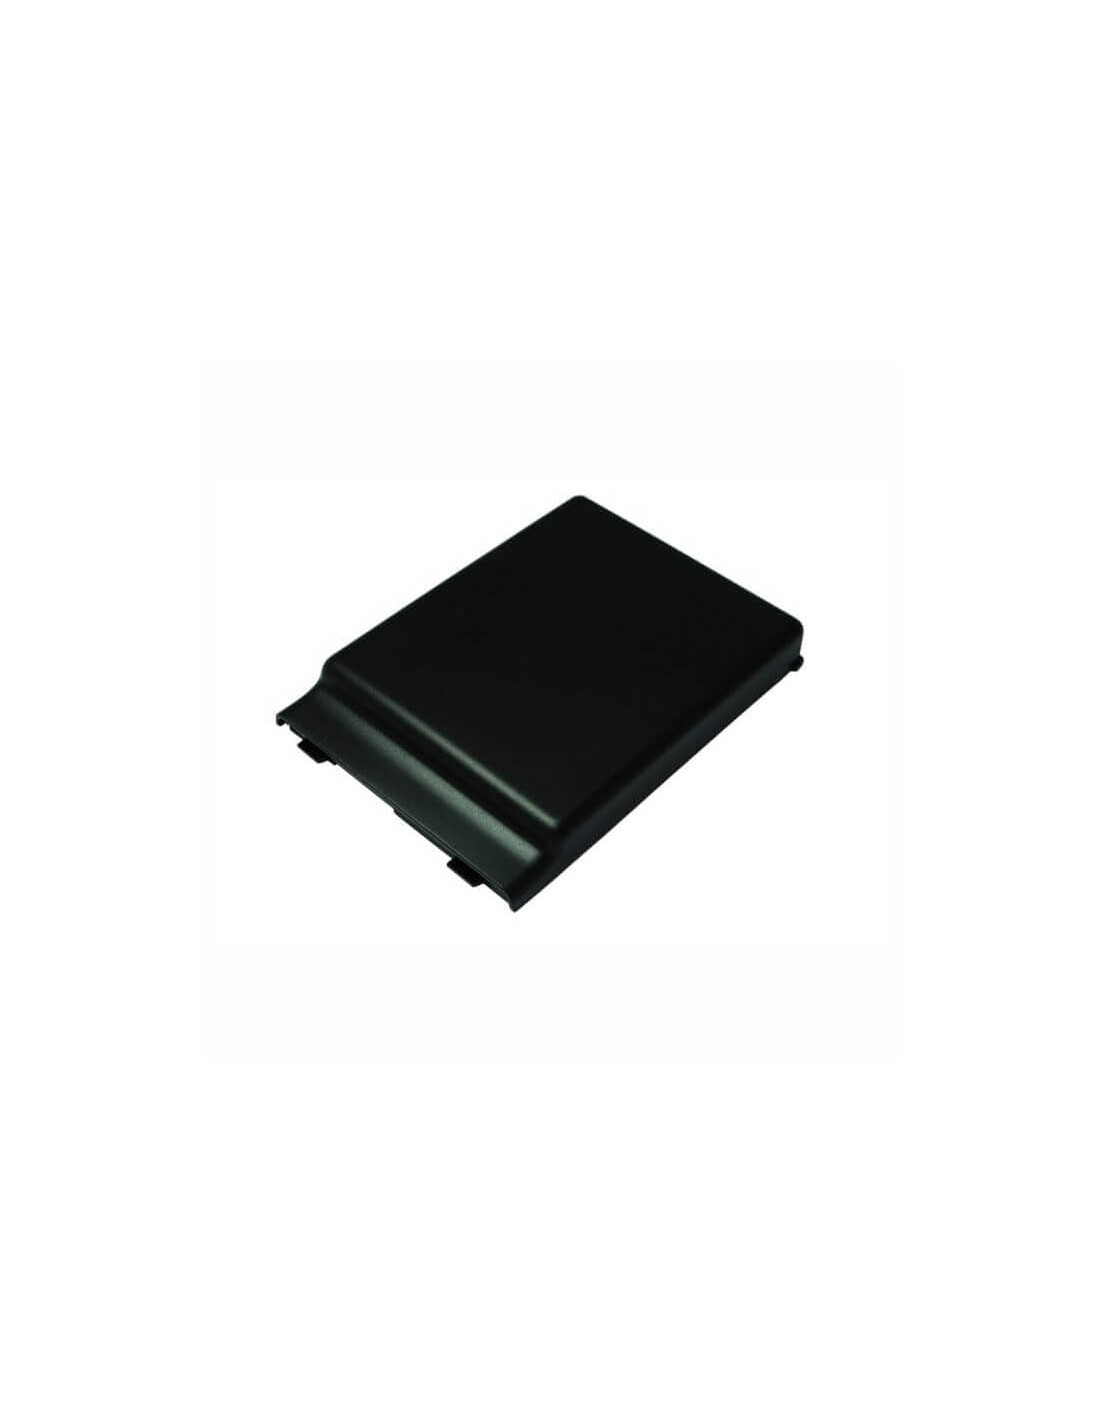 Battery for Audiovox Ppc-6600, Ppc-6601, Vx6600 3.7V, 3600mAh - 13.32Wh